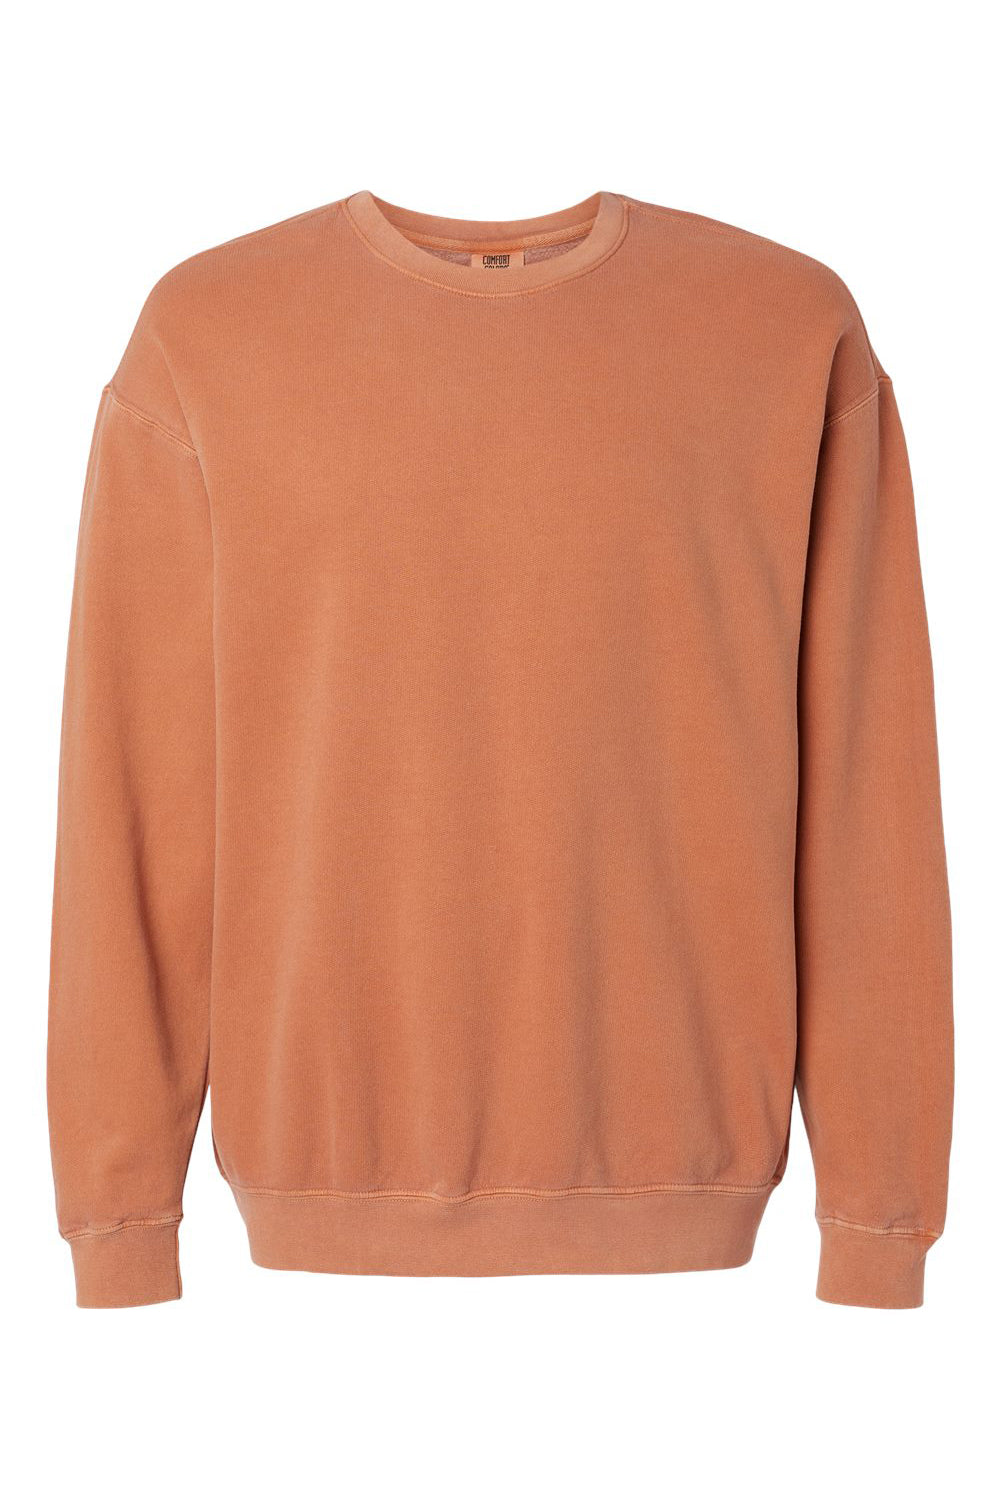 Comfort Colors 1466 Mens Garment Dyed Fleece Crewneck Sweatshirt Yam Orange Flat Front